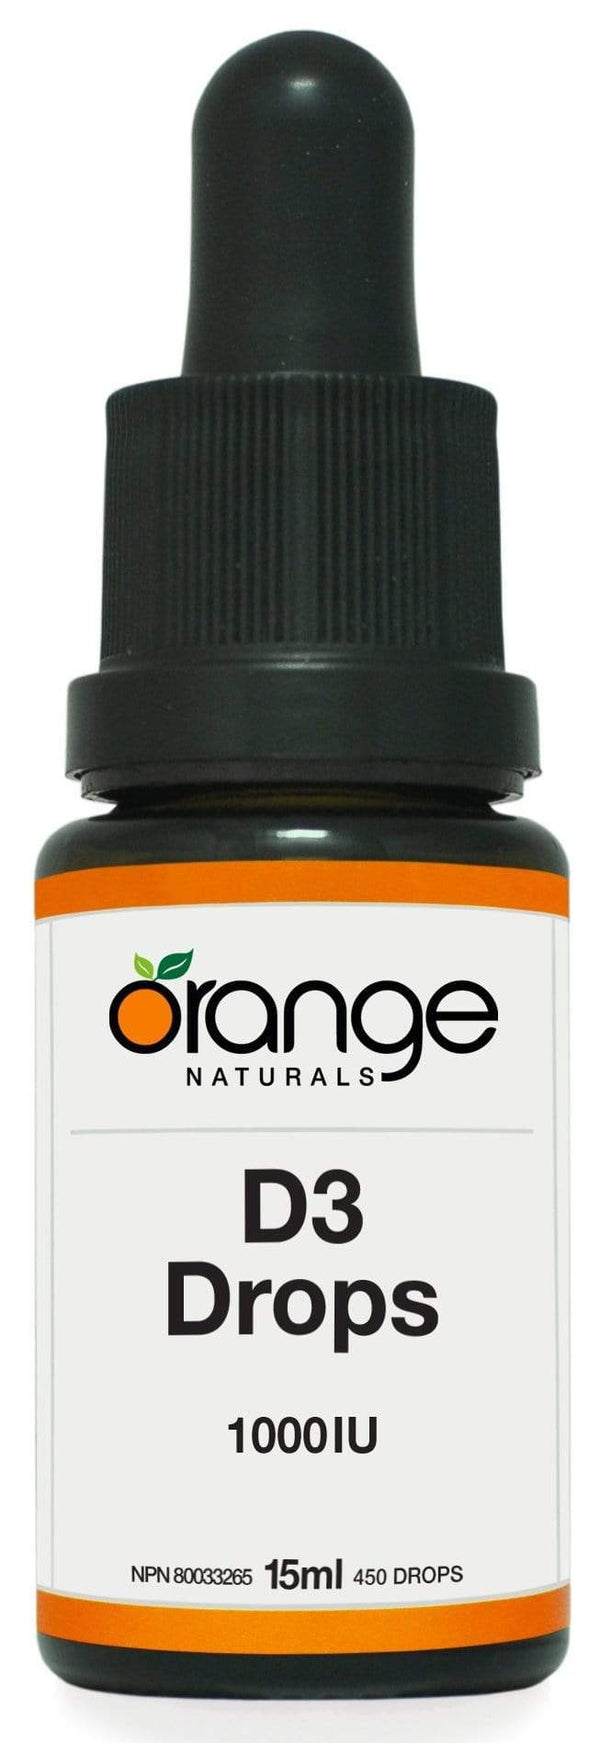 Orange Naturals D3 Drops 1000IU orange MCT base